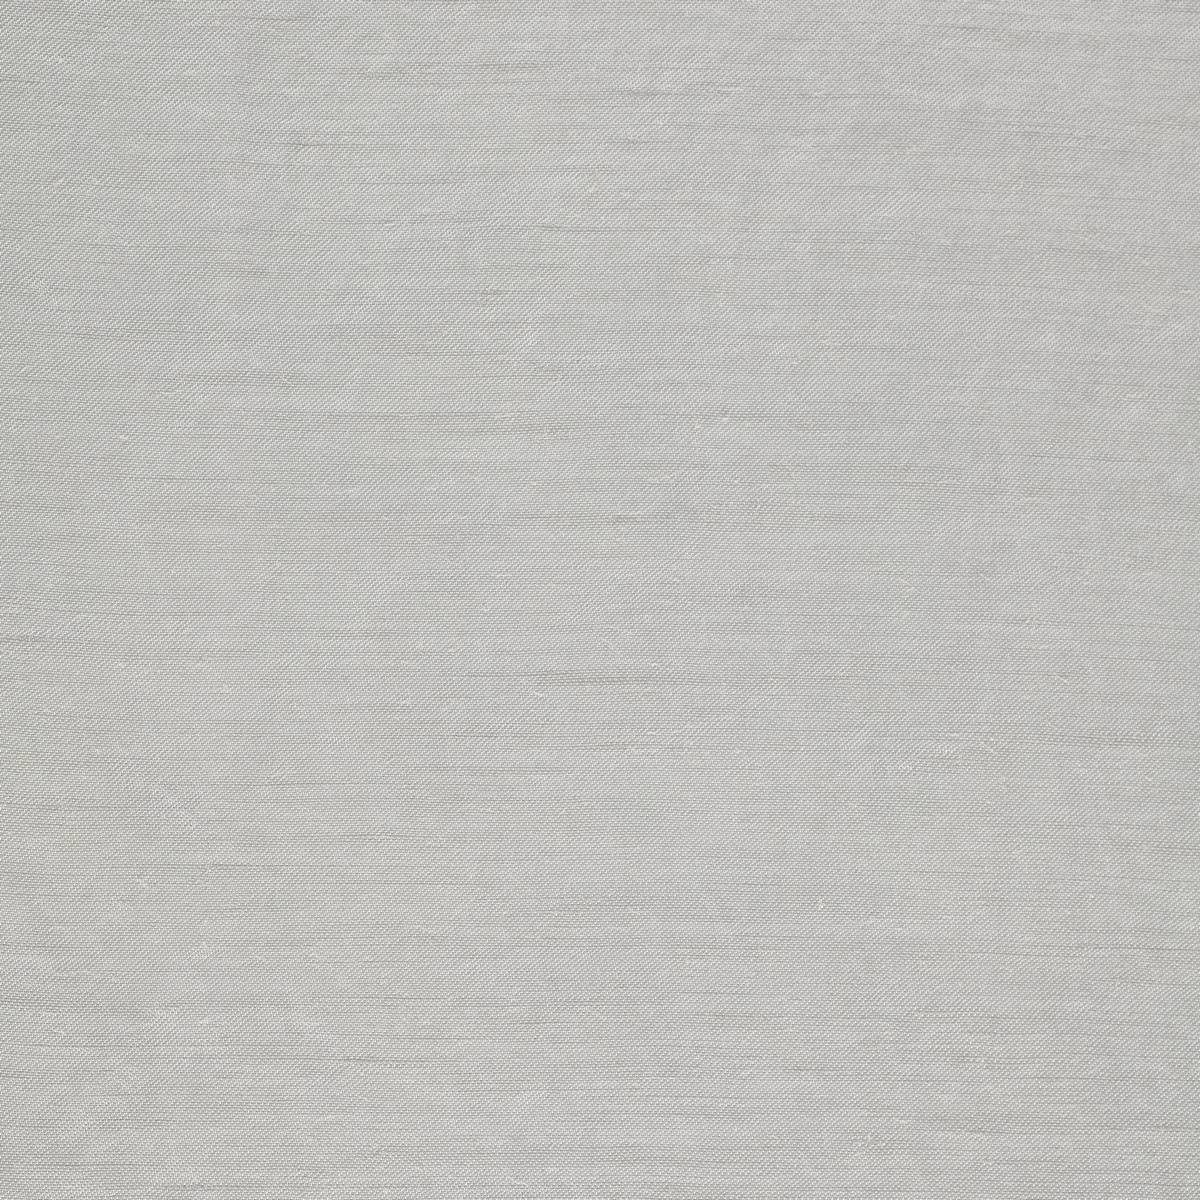 Amoret Platinum White Fabric by Zoffany